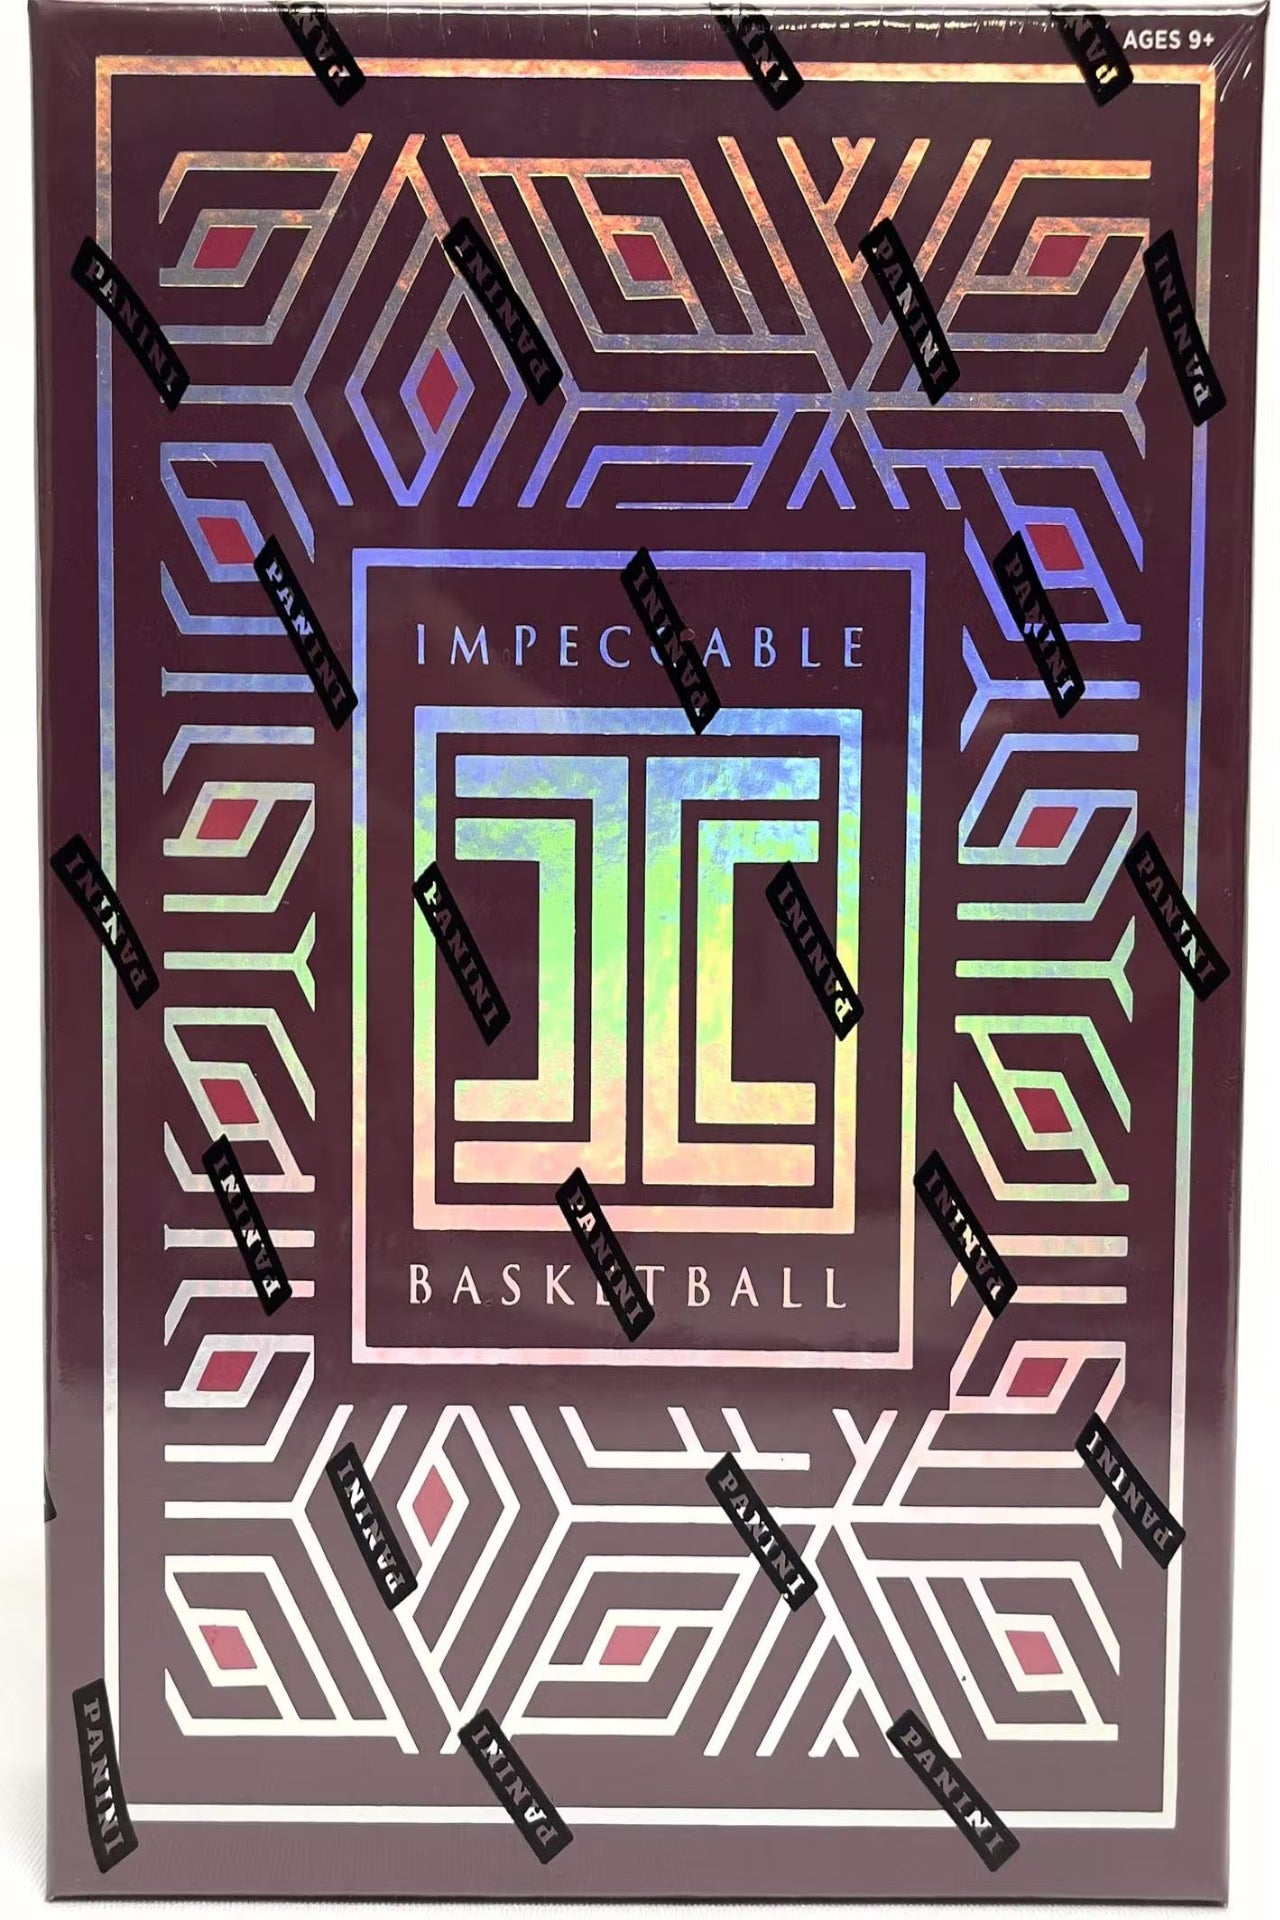 2020/21 Panini Impeccable Basketball Box